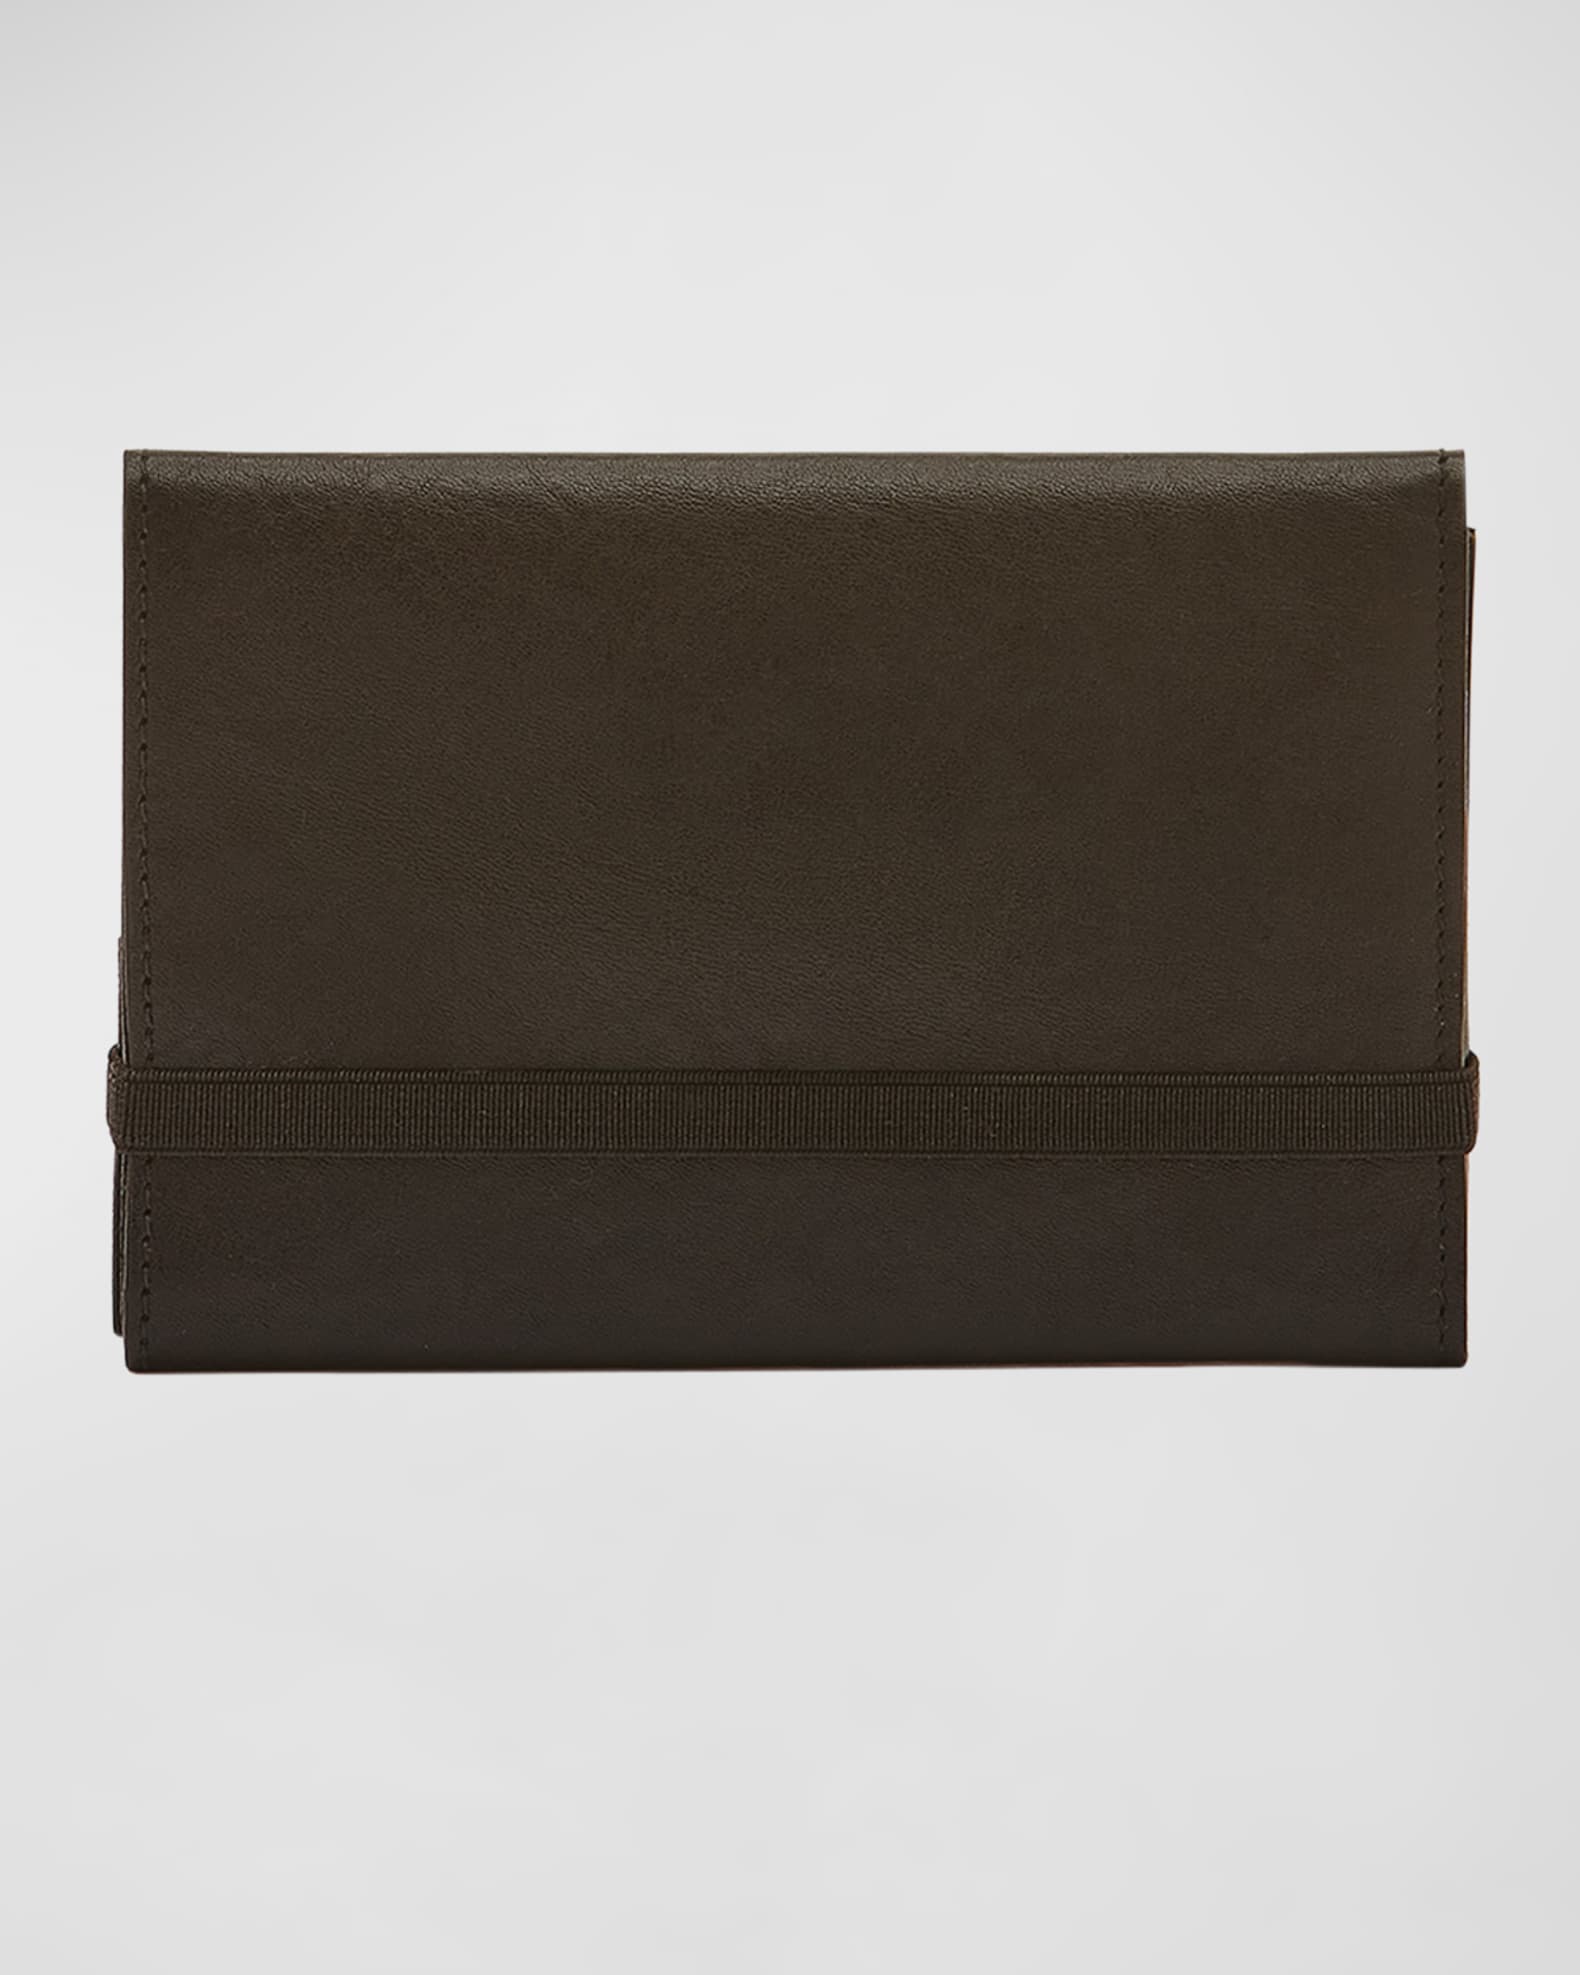 Acne Studios Men's Leather Trifold Wallet